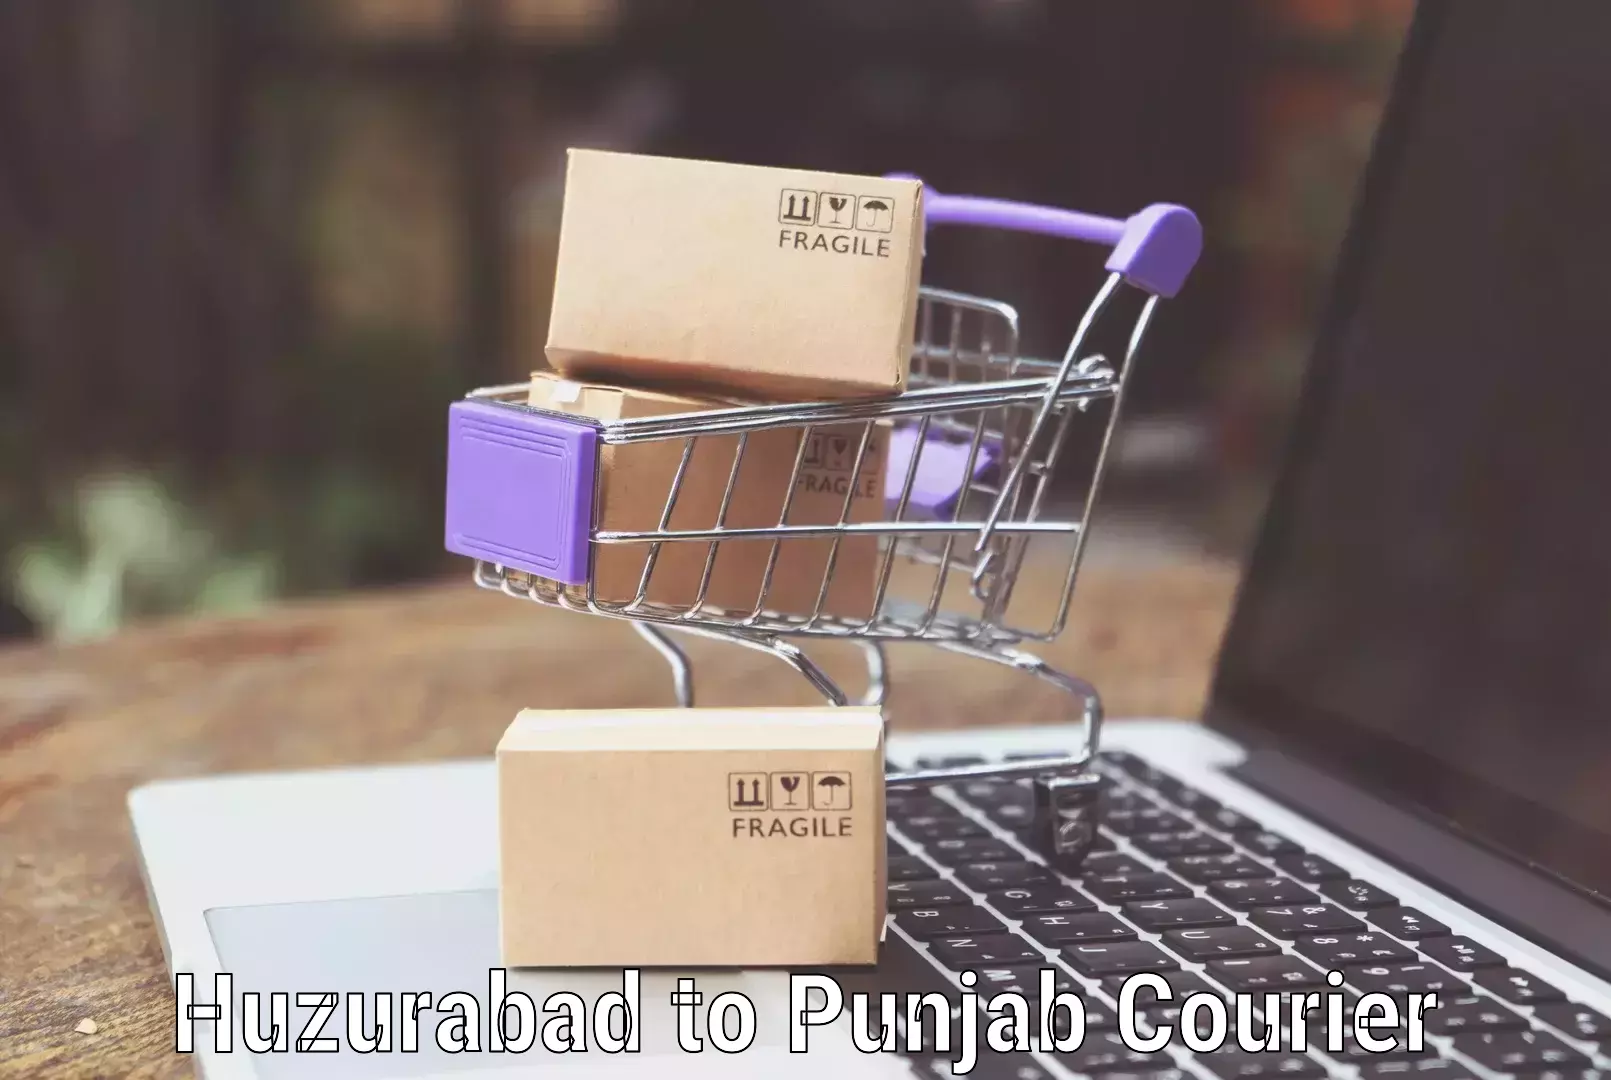 Doorstep luggage collection in Huzurabad to Punjab